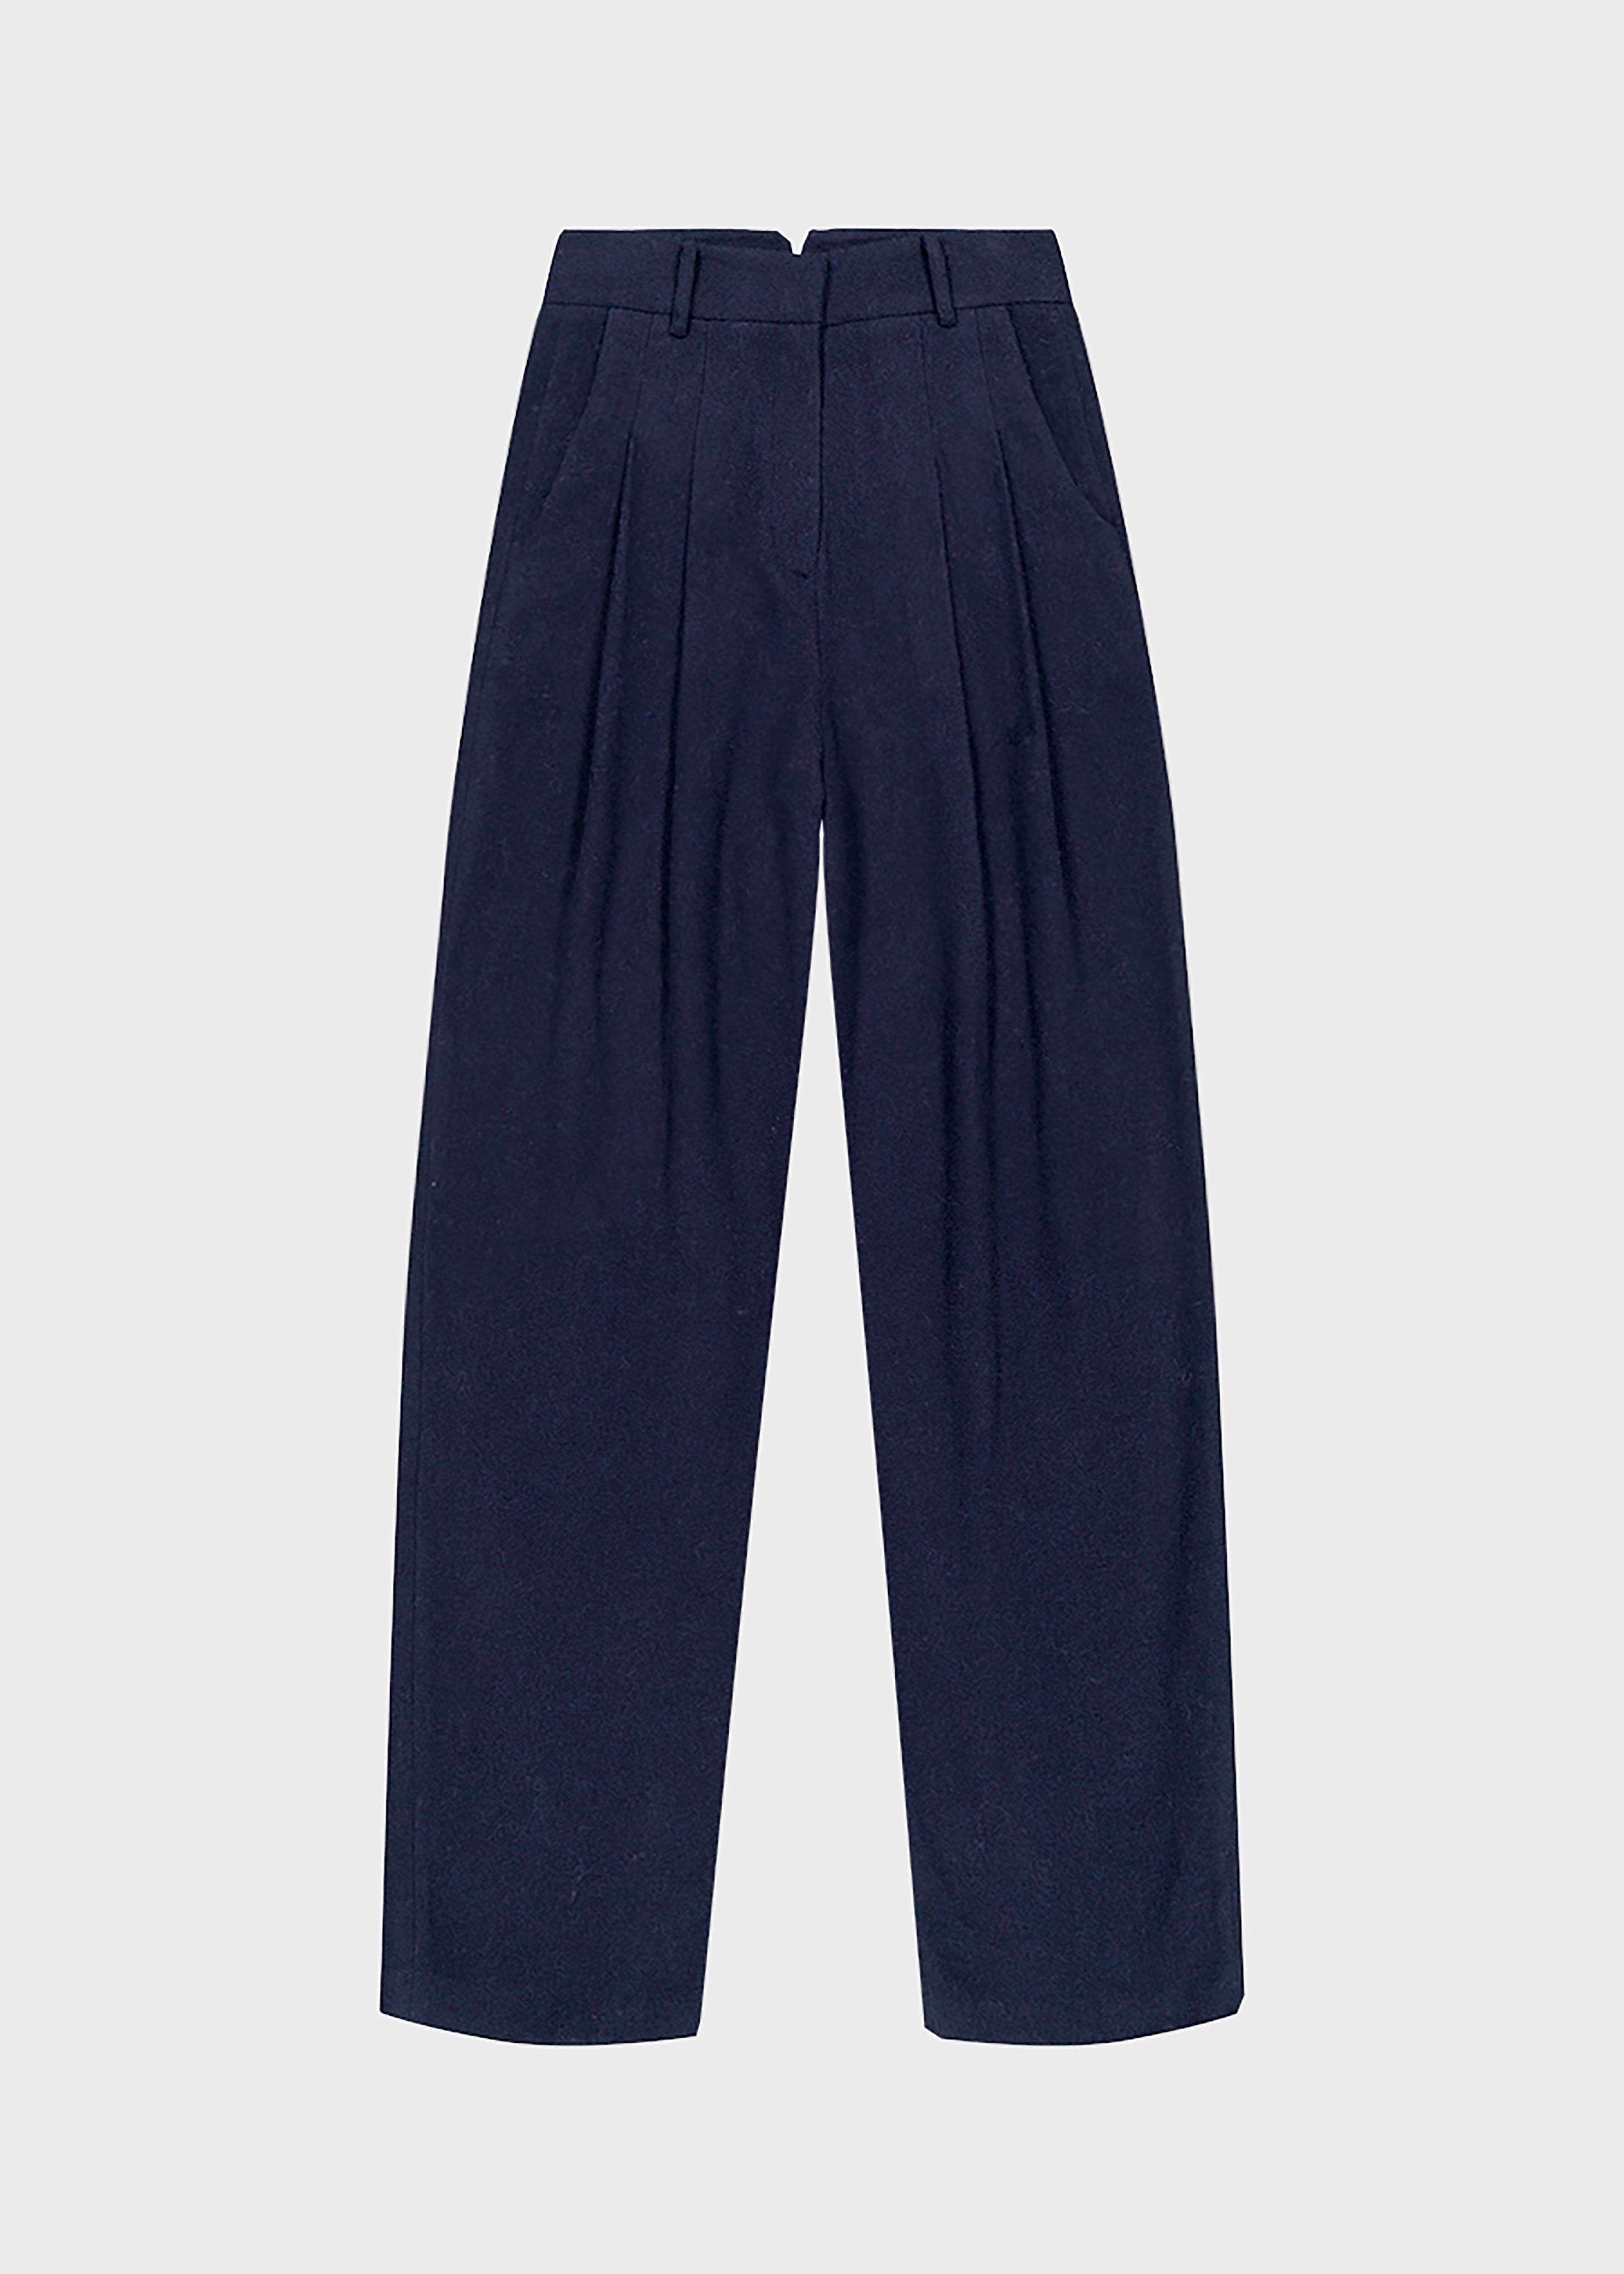 Shop Louis Raphael Navy 100% Wool Pants